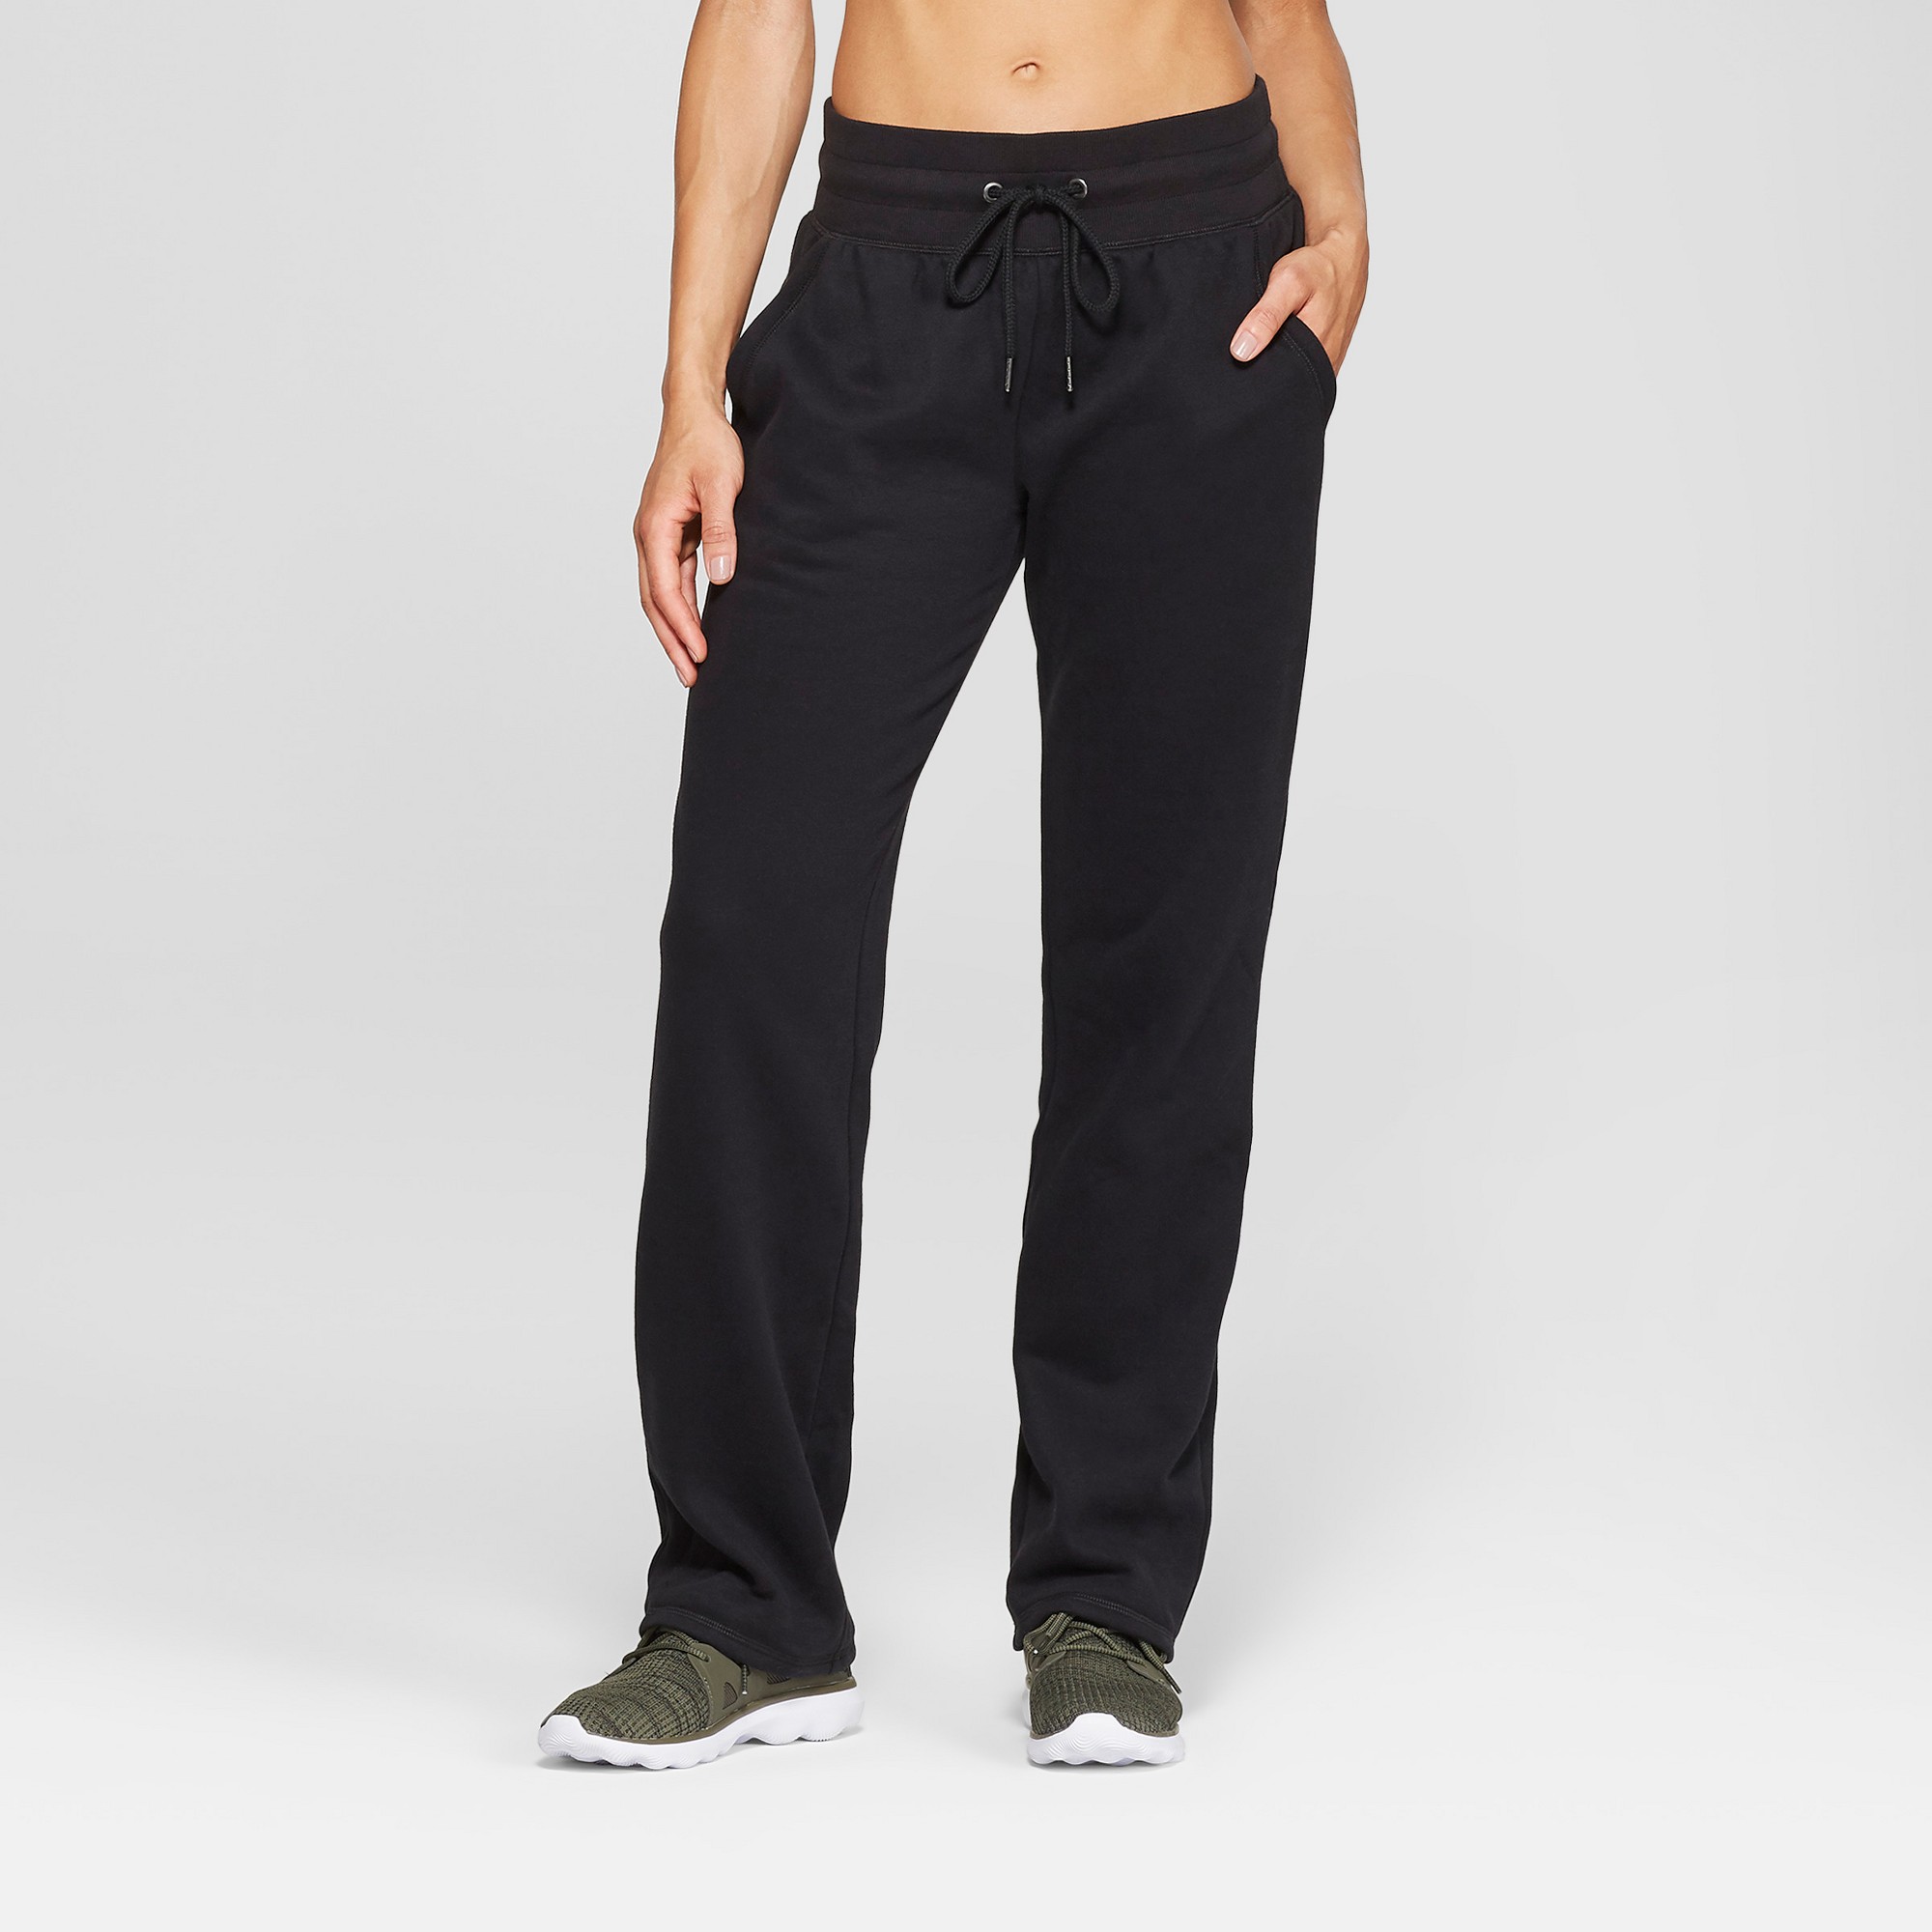 Women's Mid-Rise Straight Authentic Fleece Sweatpants - C9 Champion Black  L, Size: Large, by C9 Champion